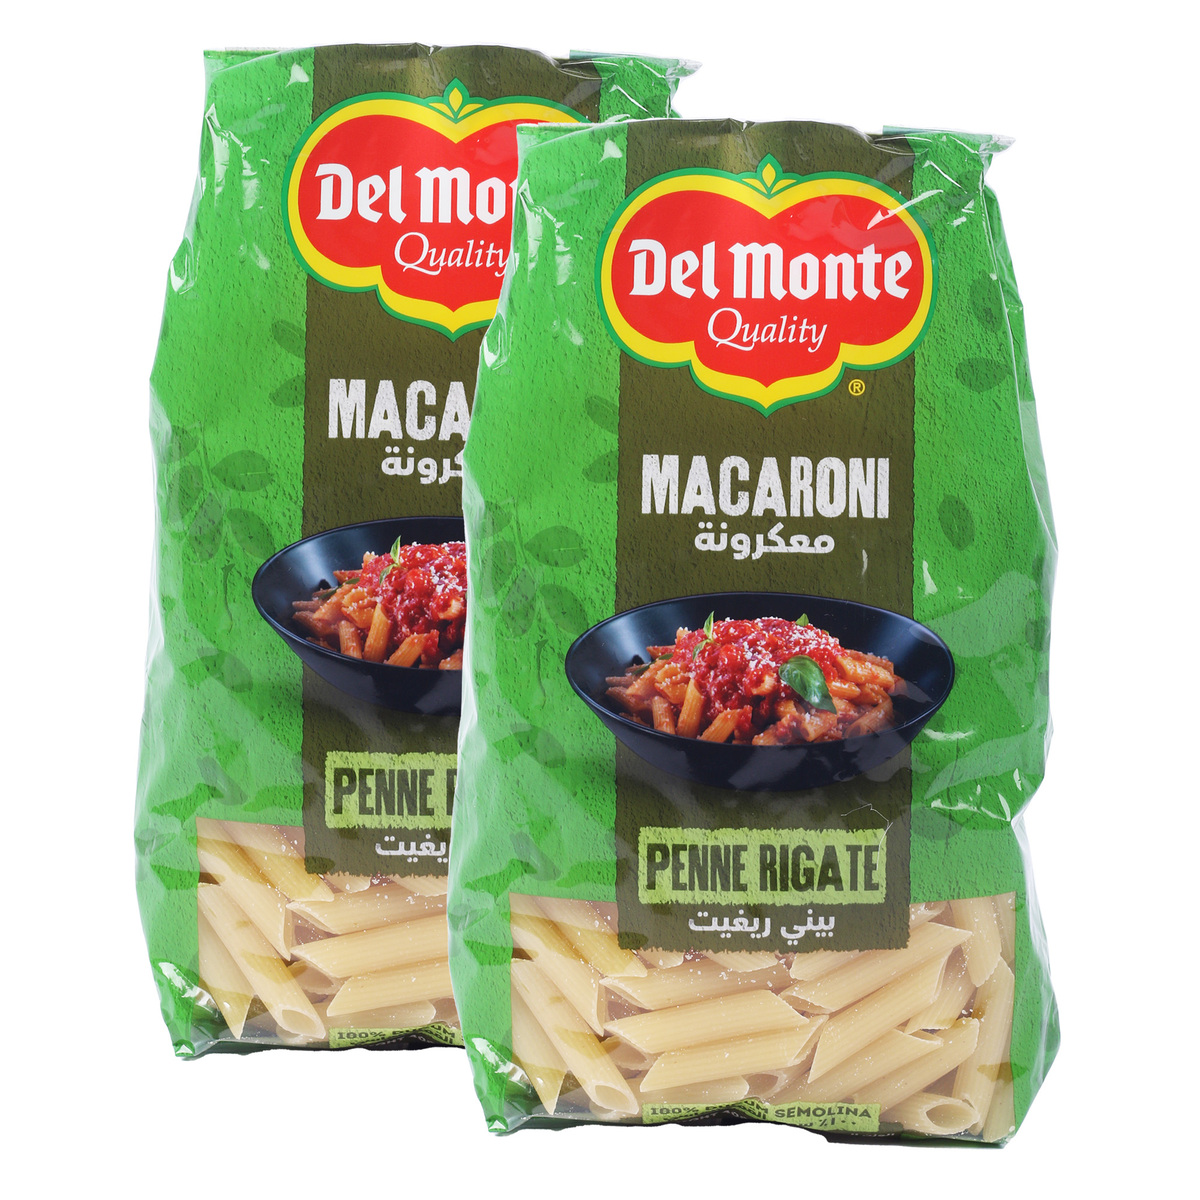 Del Monte Penne Rigate Value Pack 2 x 400 g